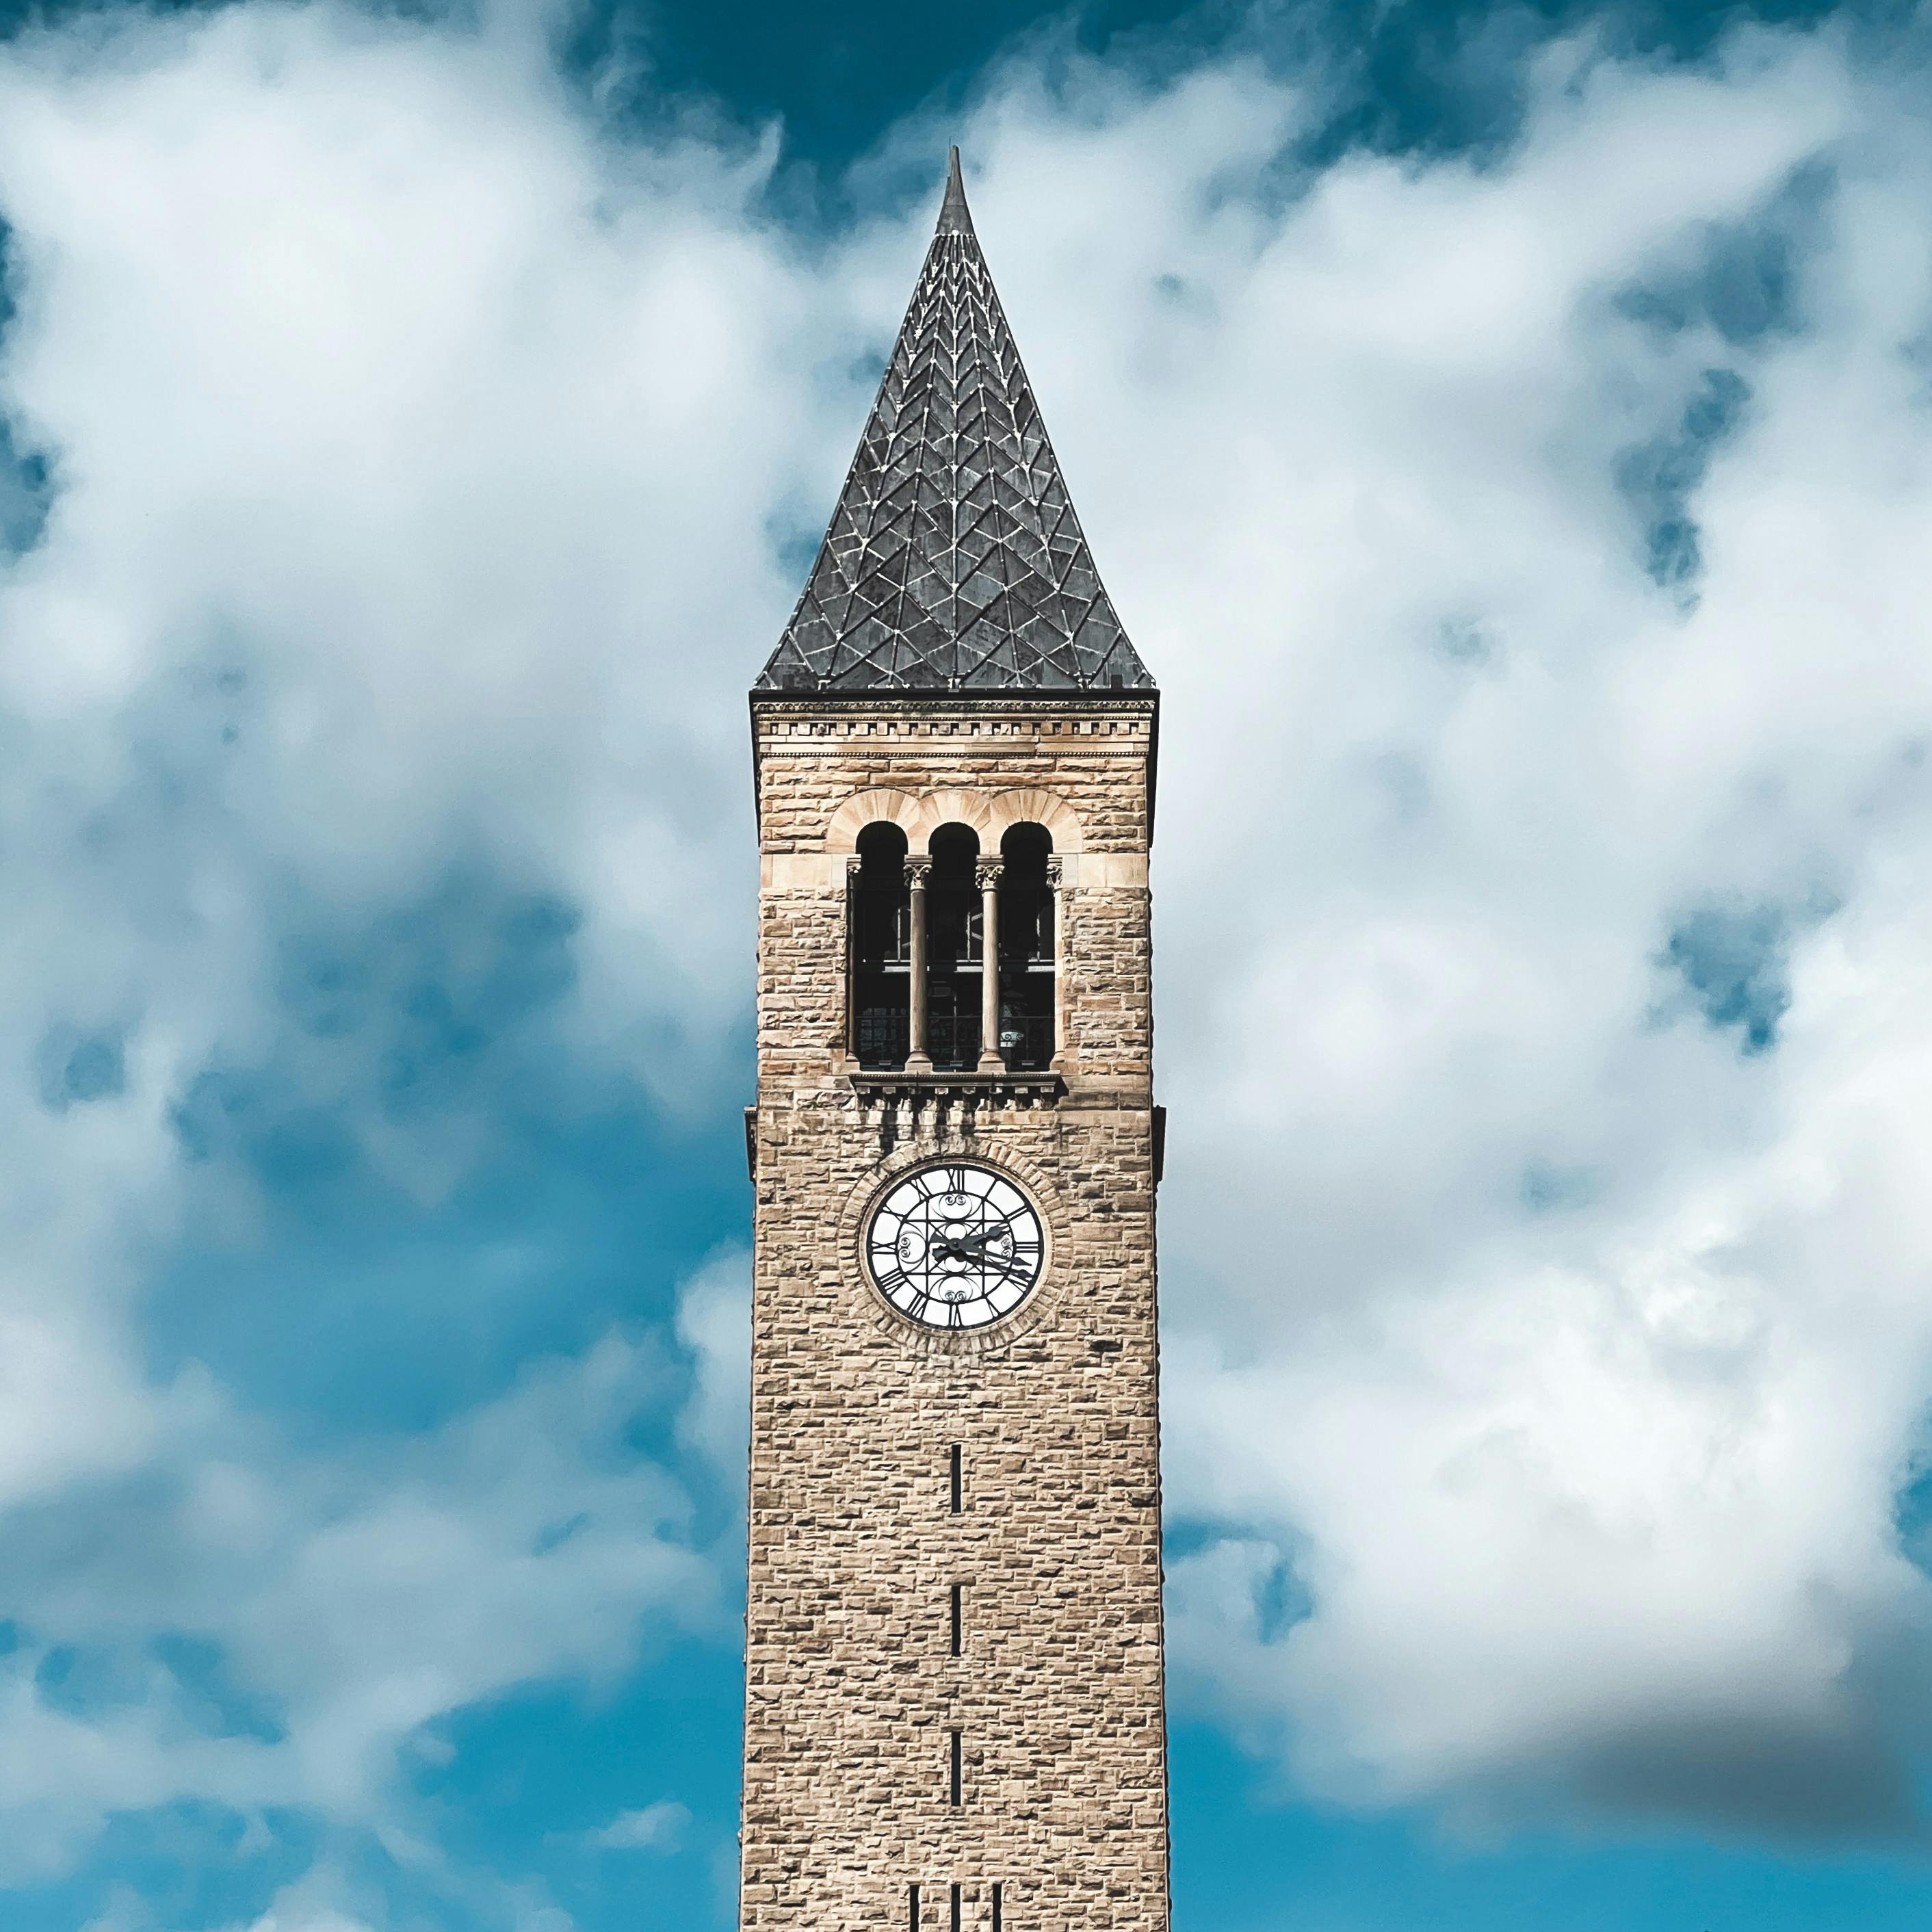 The McGraw Clock Tower in Cornell University · Free Stock Photo